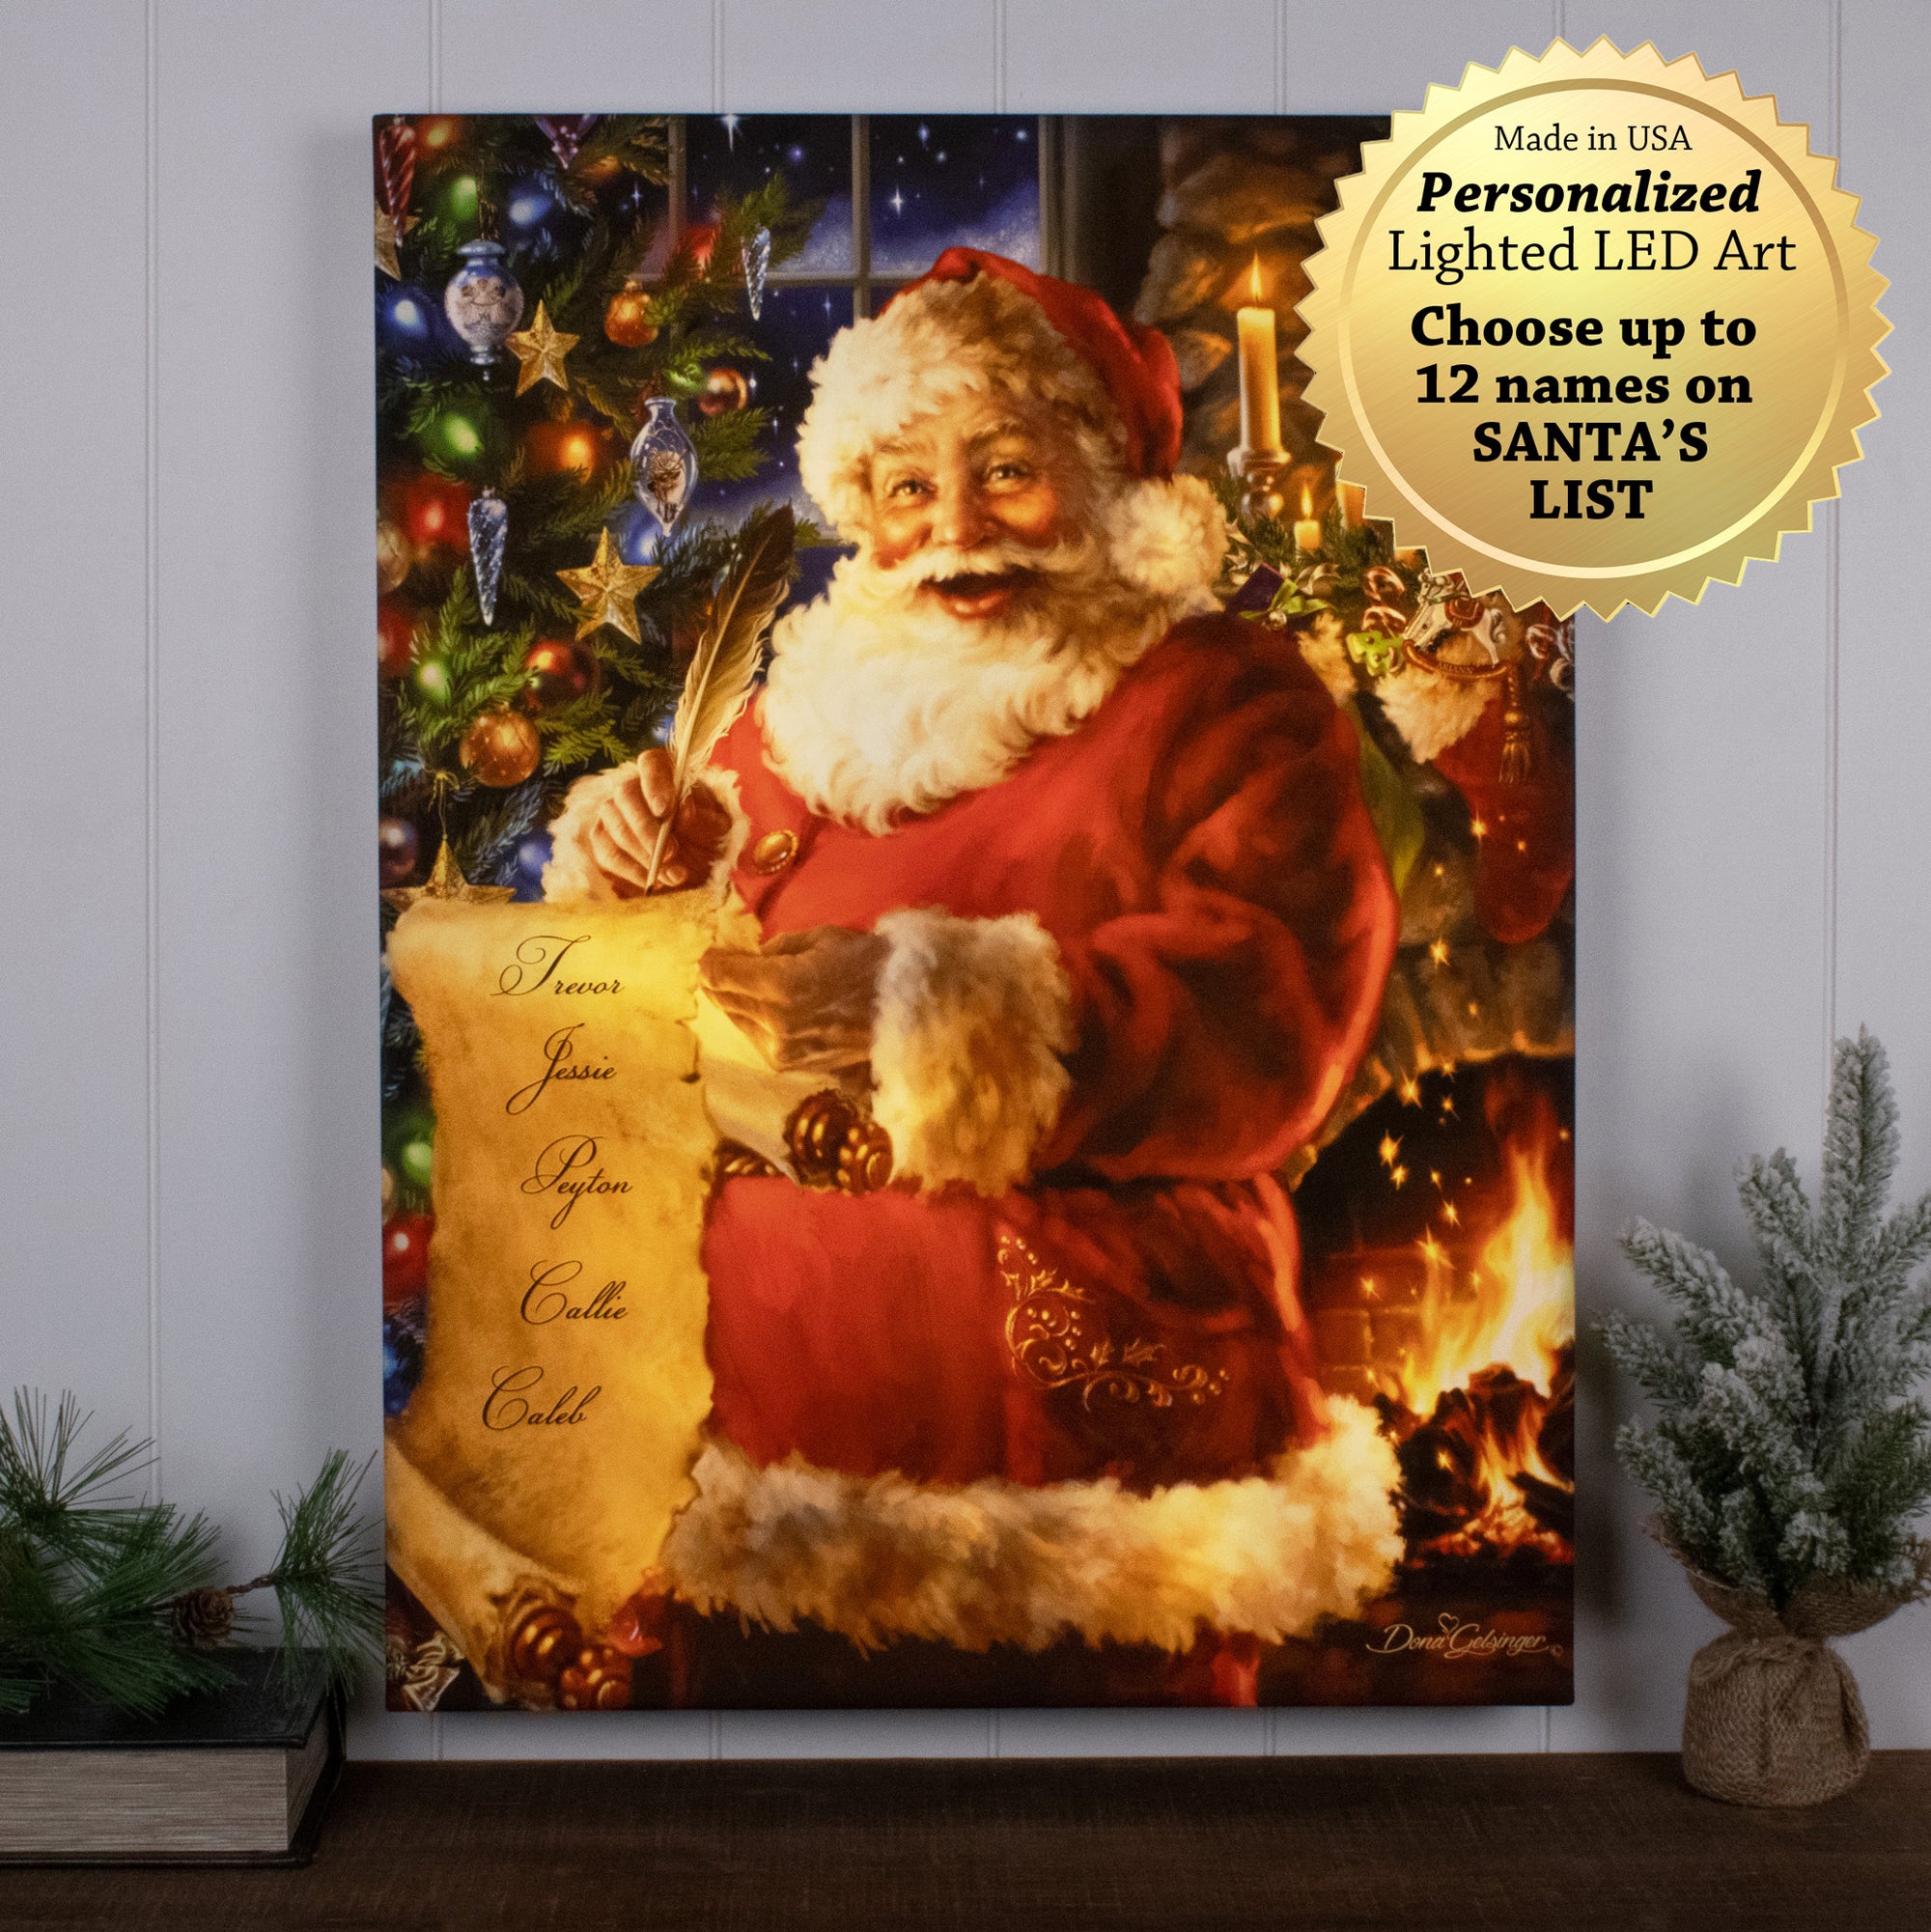 Santa's List Personalized LED Illuminated Wall Art | Glow Decor